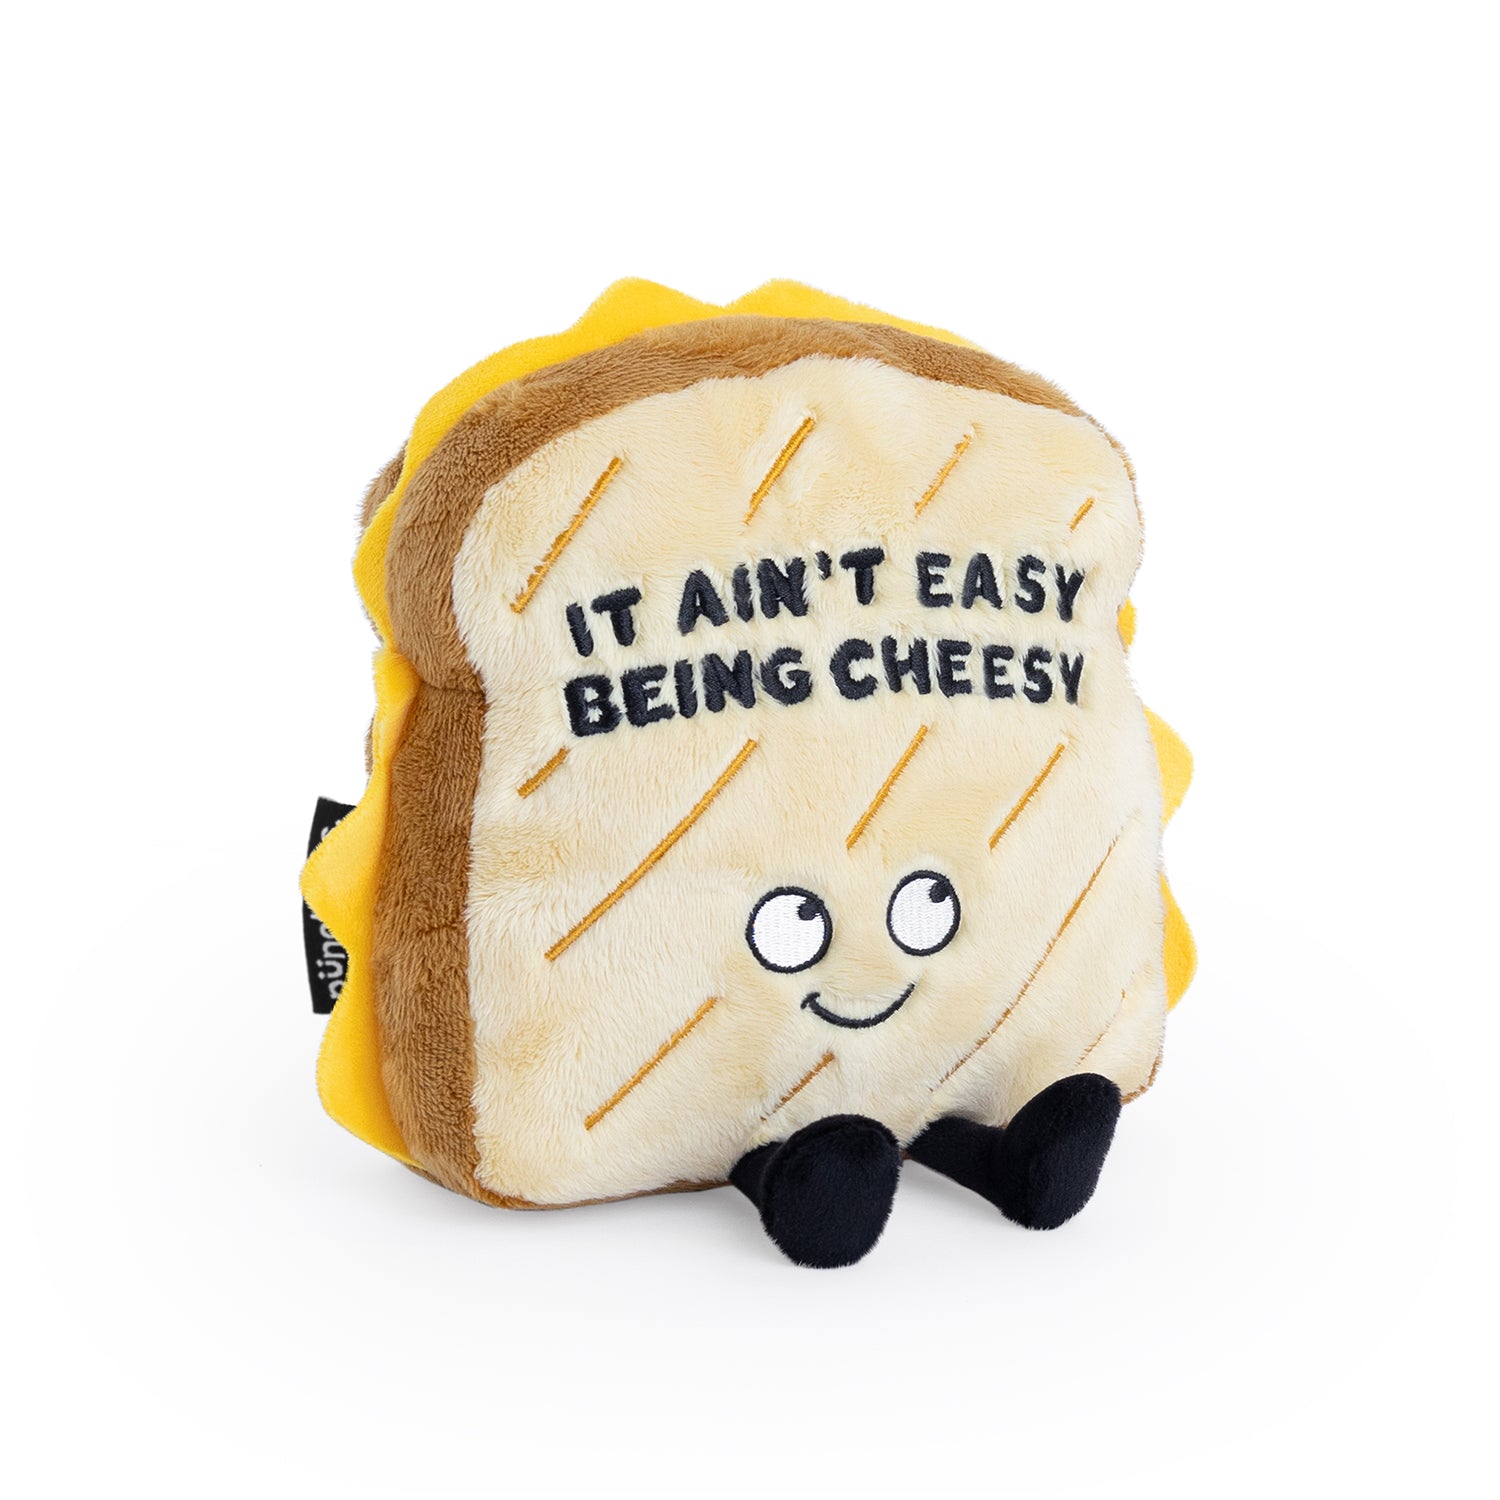 Grilled Cheese Sandwich - Being Cheesy Plush - Sensory Circle